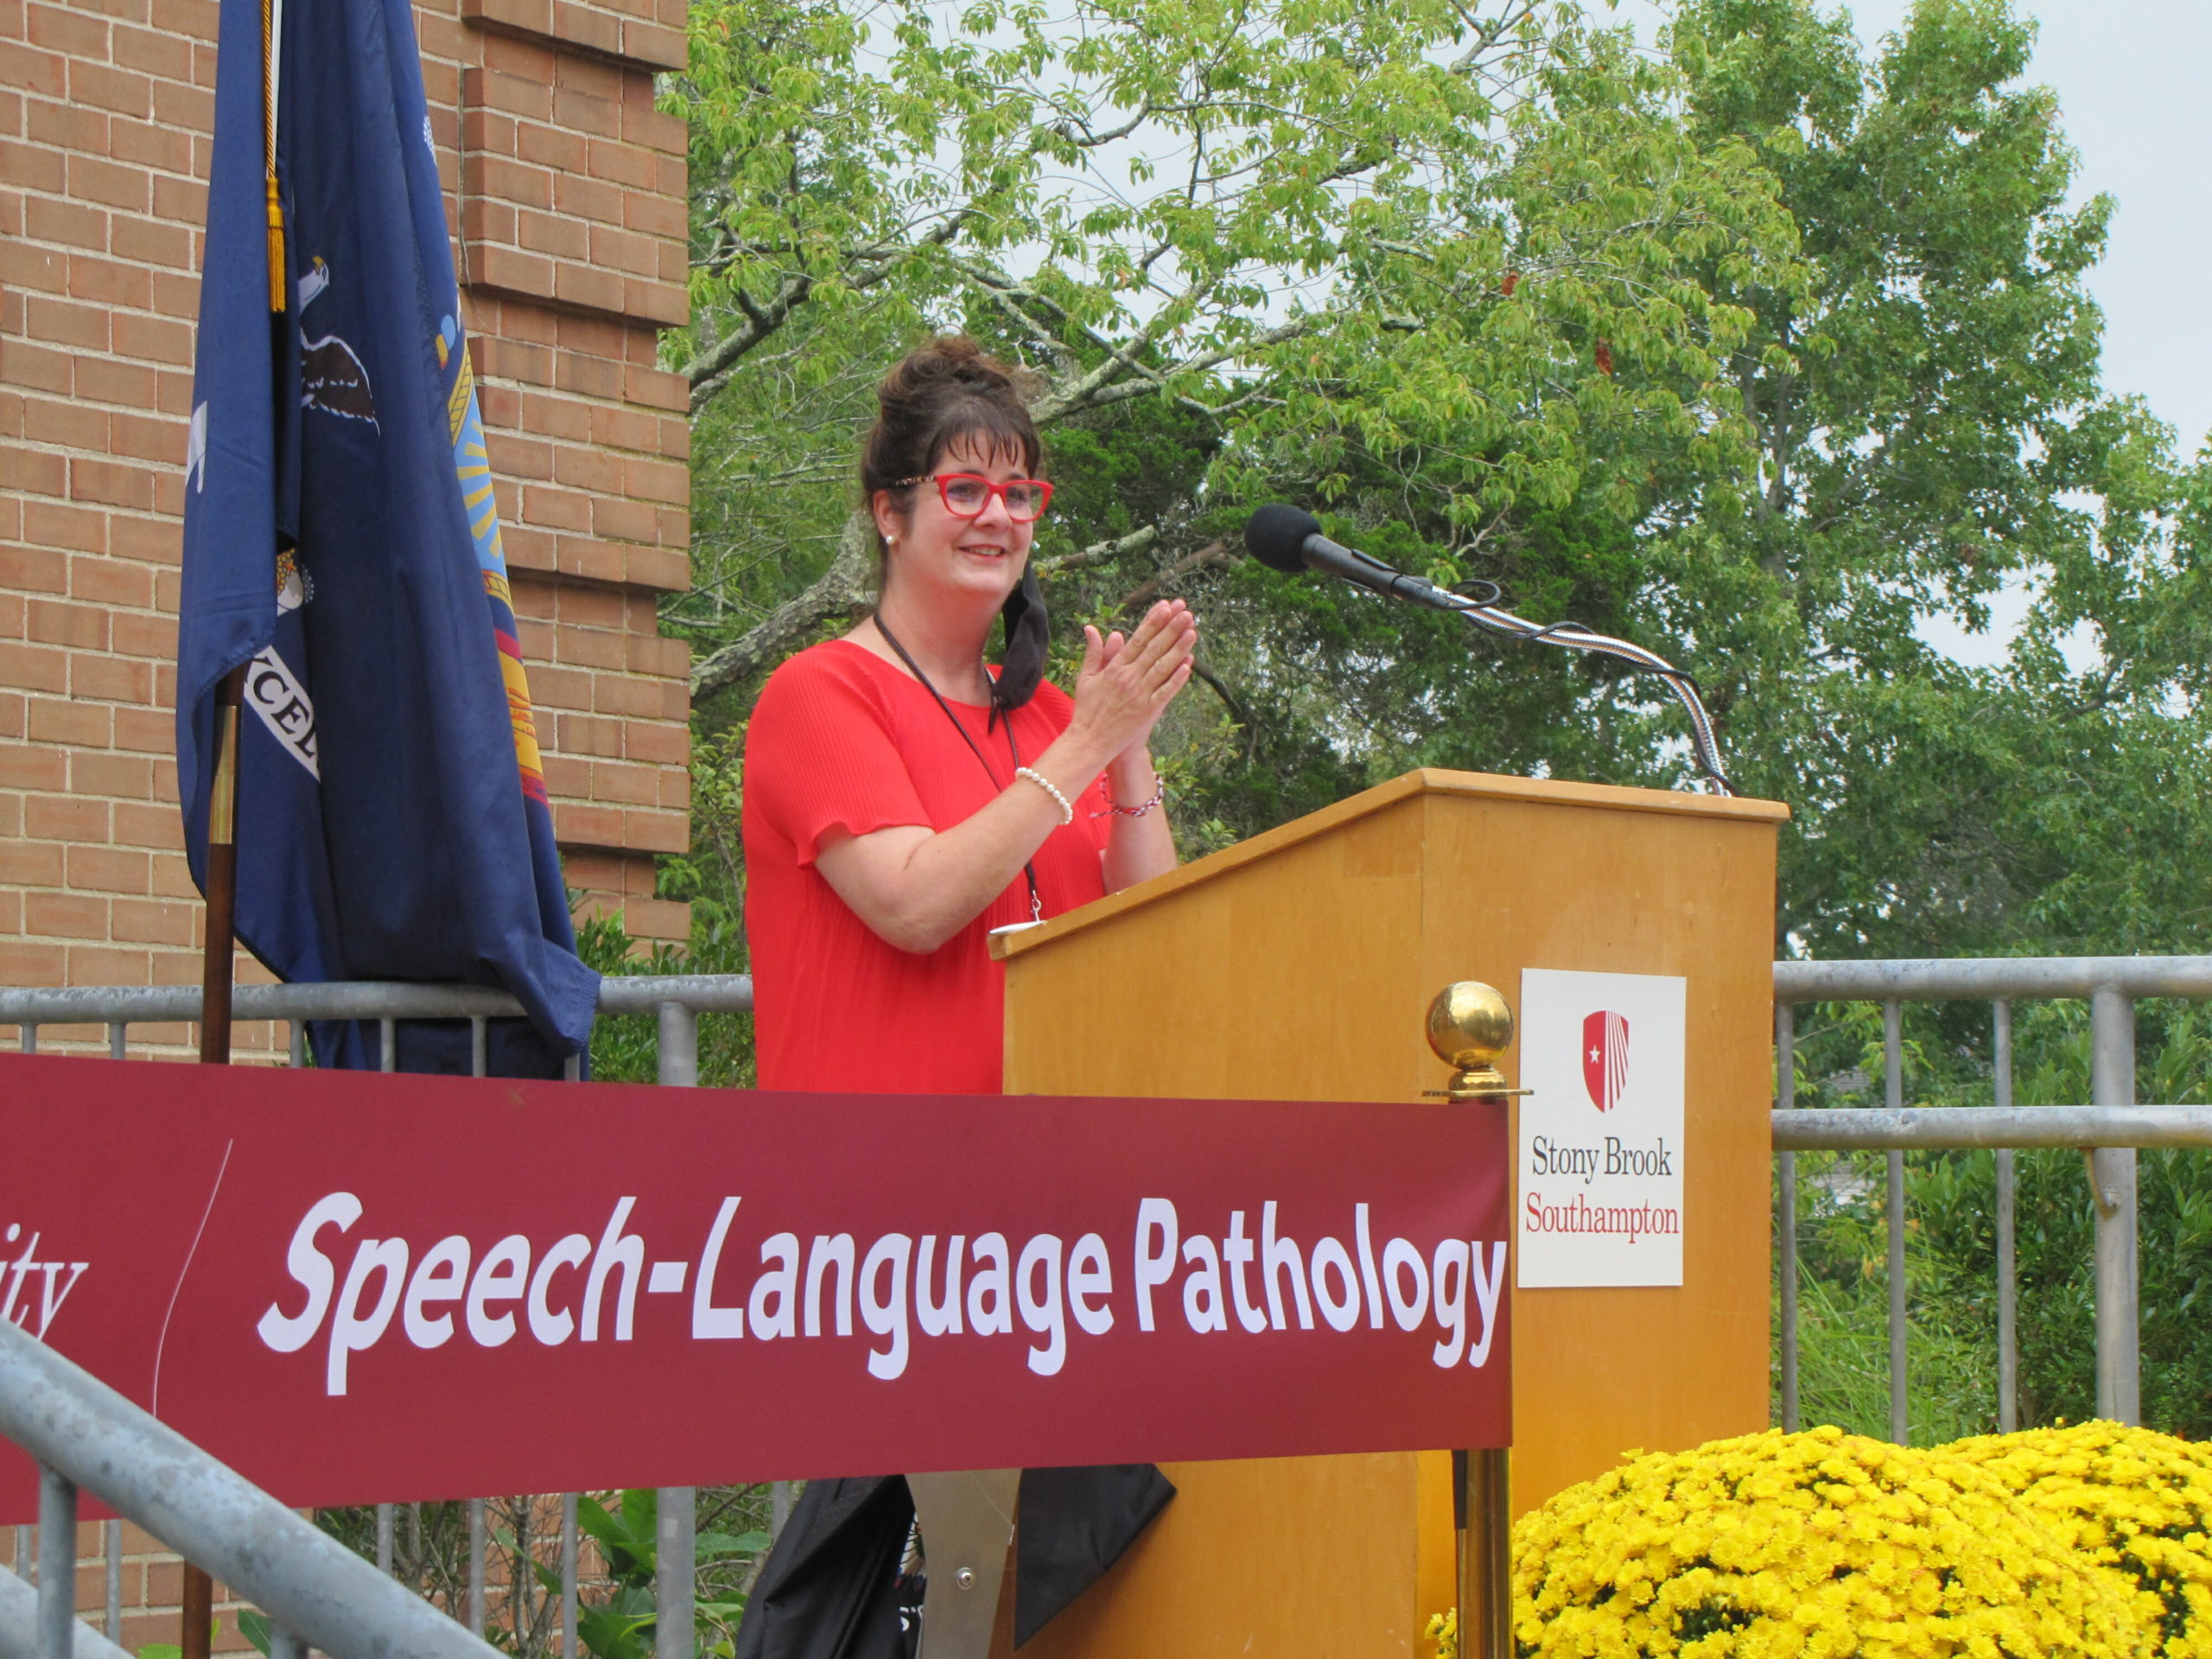 Renee Fabus, Chairwoman of the Stony Brook University Speech-Language Pathology Program at the ribbon cutting for the program's new facilities at the Stony Brook Southampton campus.